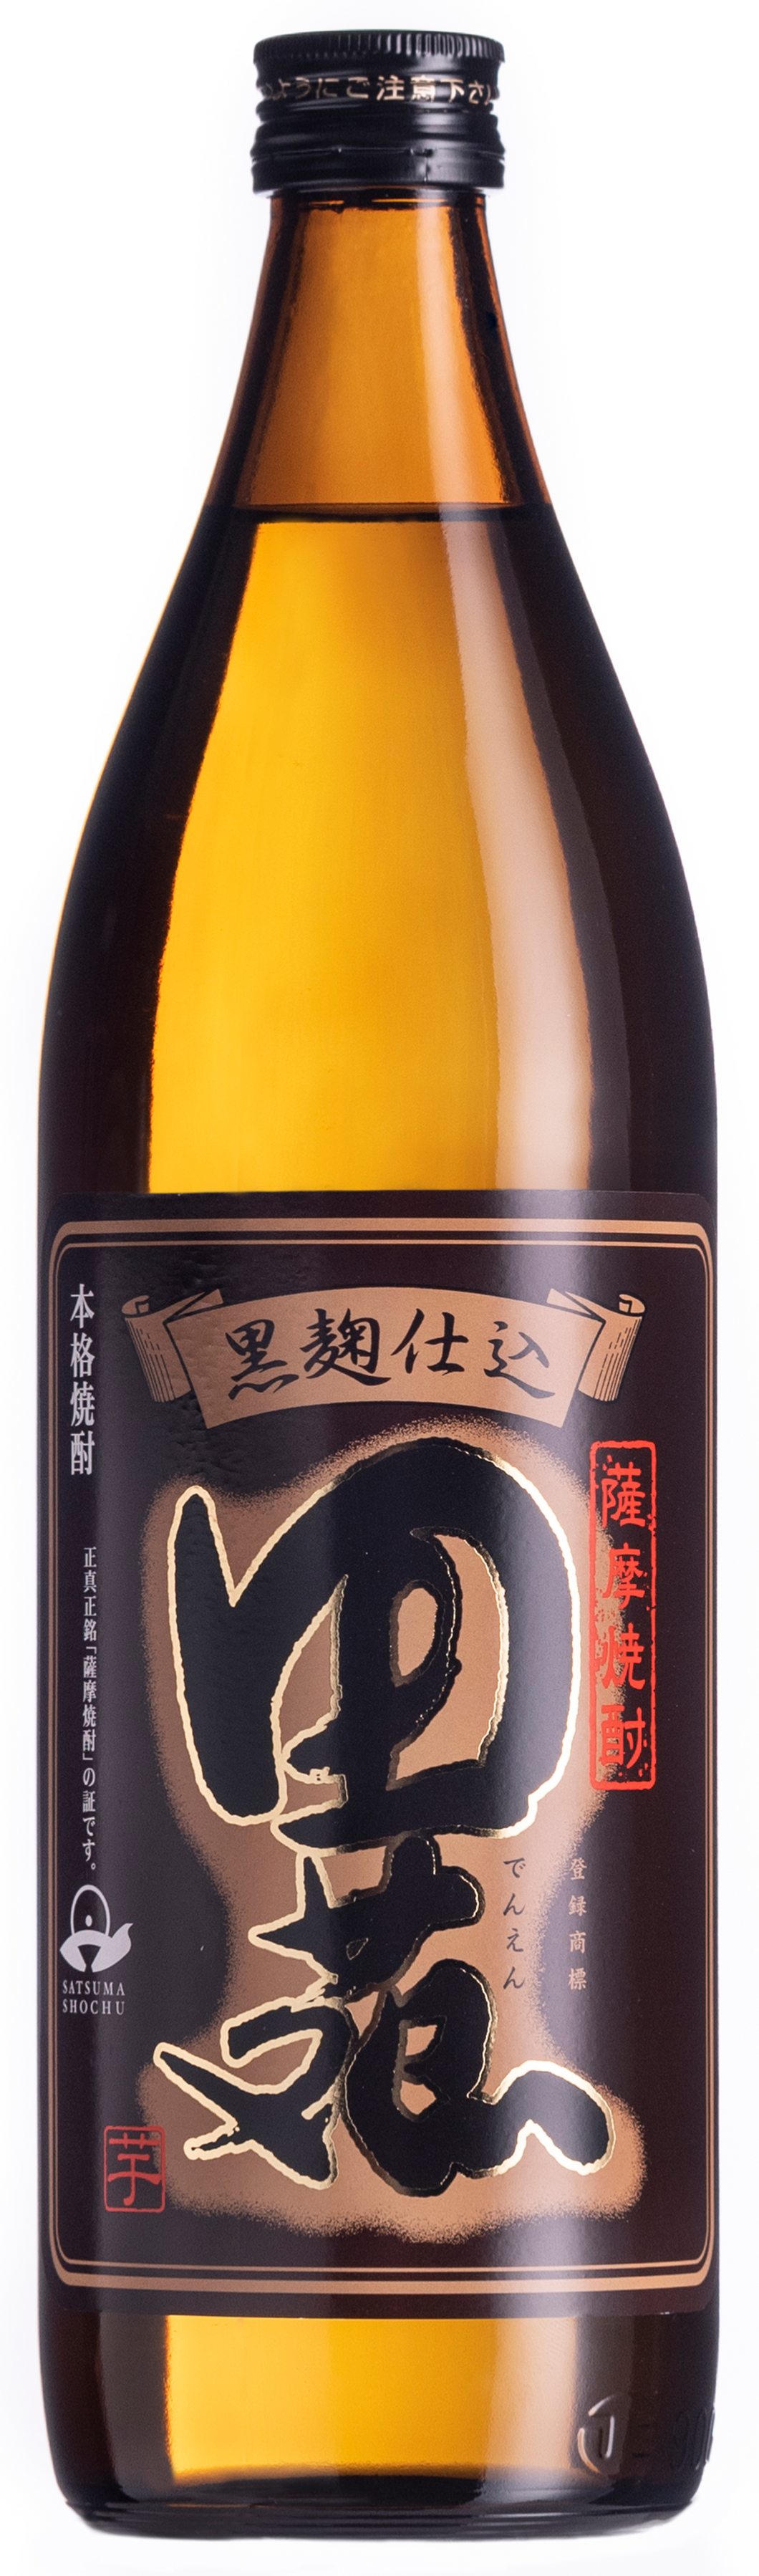 DEN-EN Sweet Potato Shochu Kuro (Black) Label 900 ml